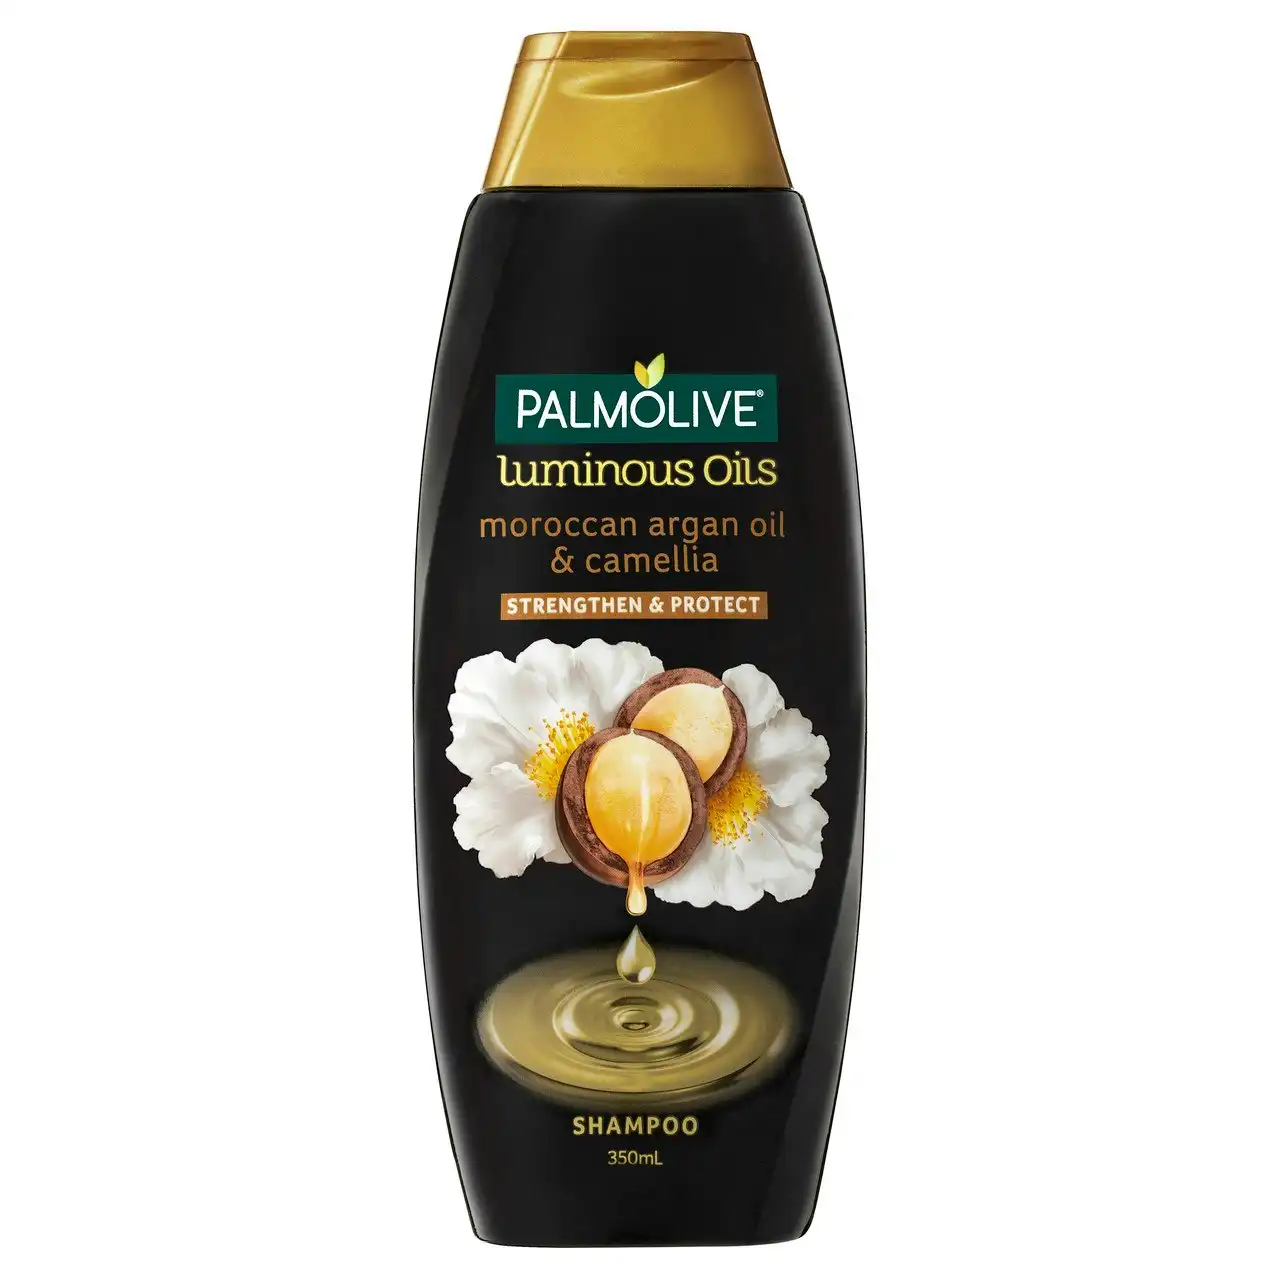 Palmolive Luminous Oils Hair Shampoo, Northern Rivers Macadamia, Argan Oil & Camellia, 350mL, Strengthen and Protect